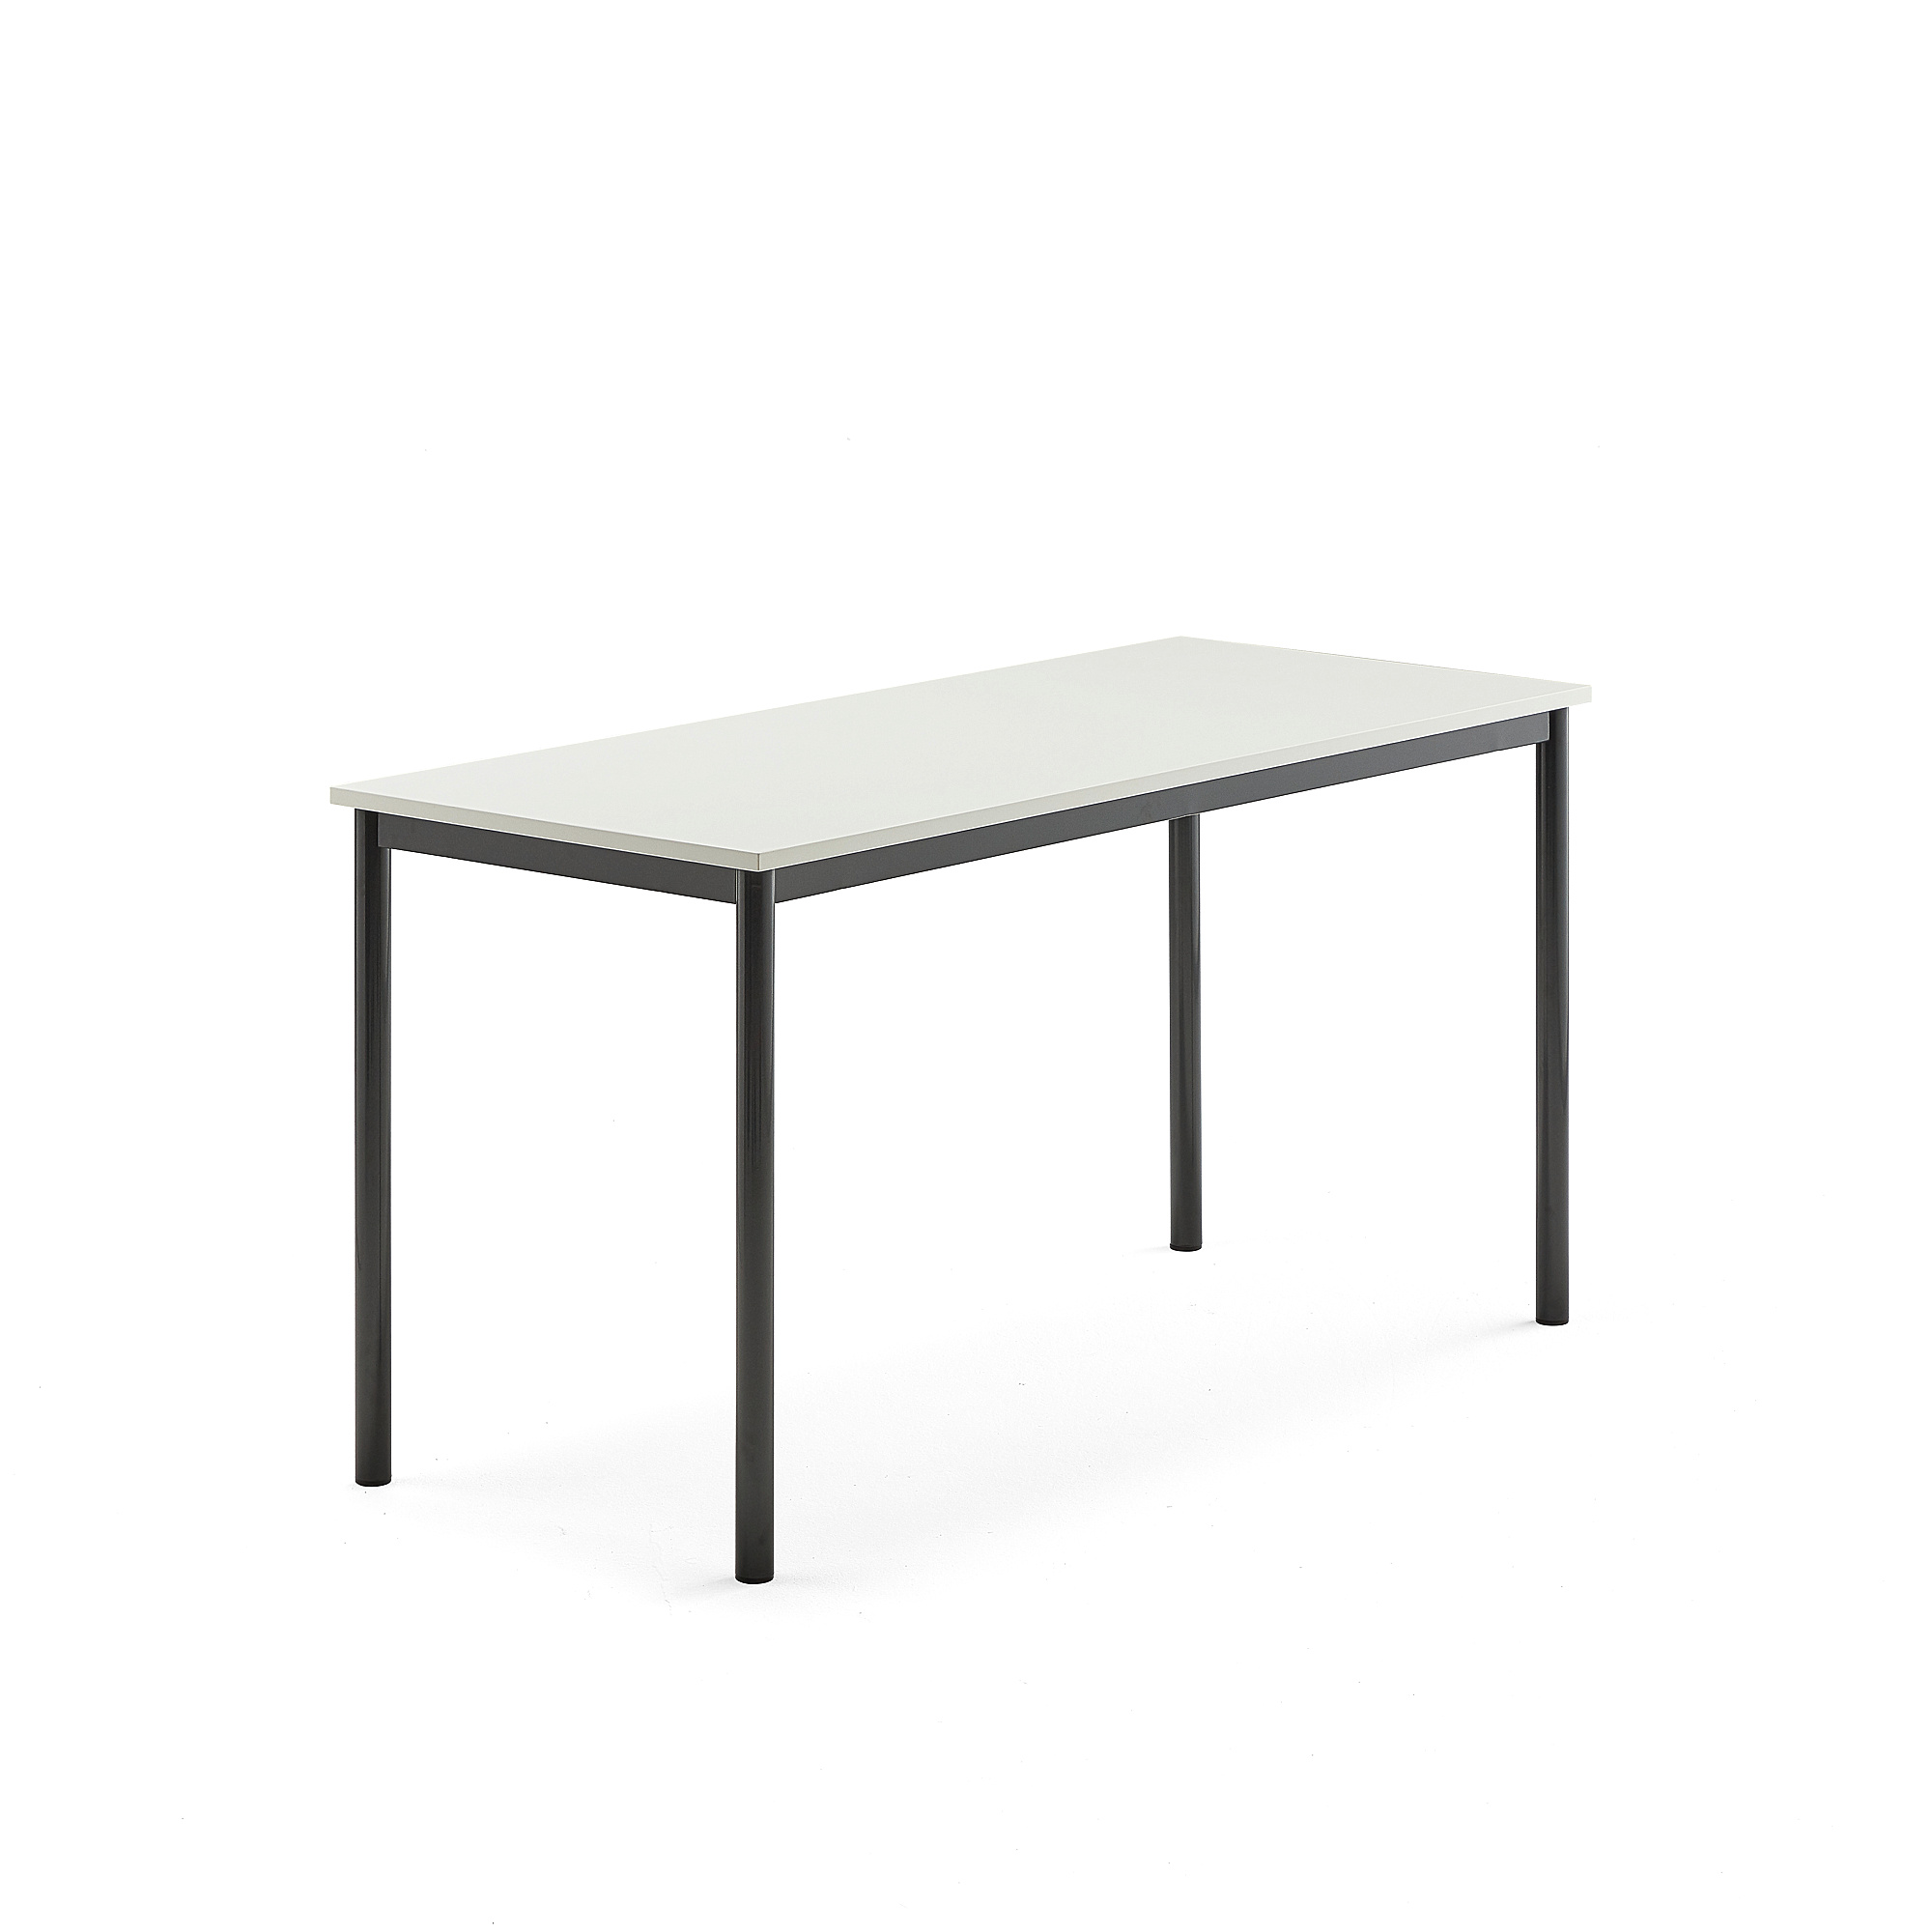 Stůl BORÅS, 1400x600x720 mm, antracitově šedé nohy, HPL deska, bílá